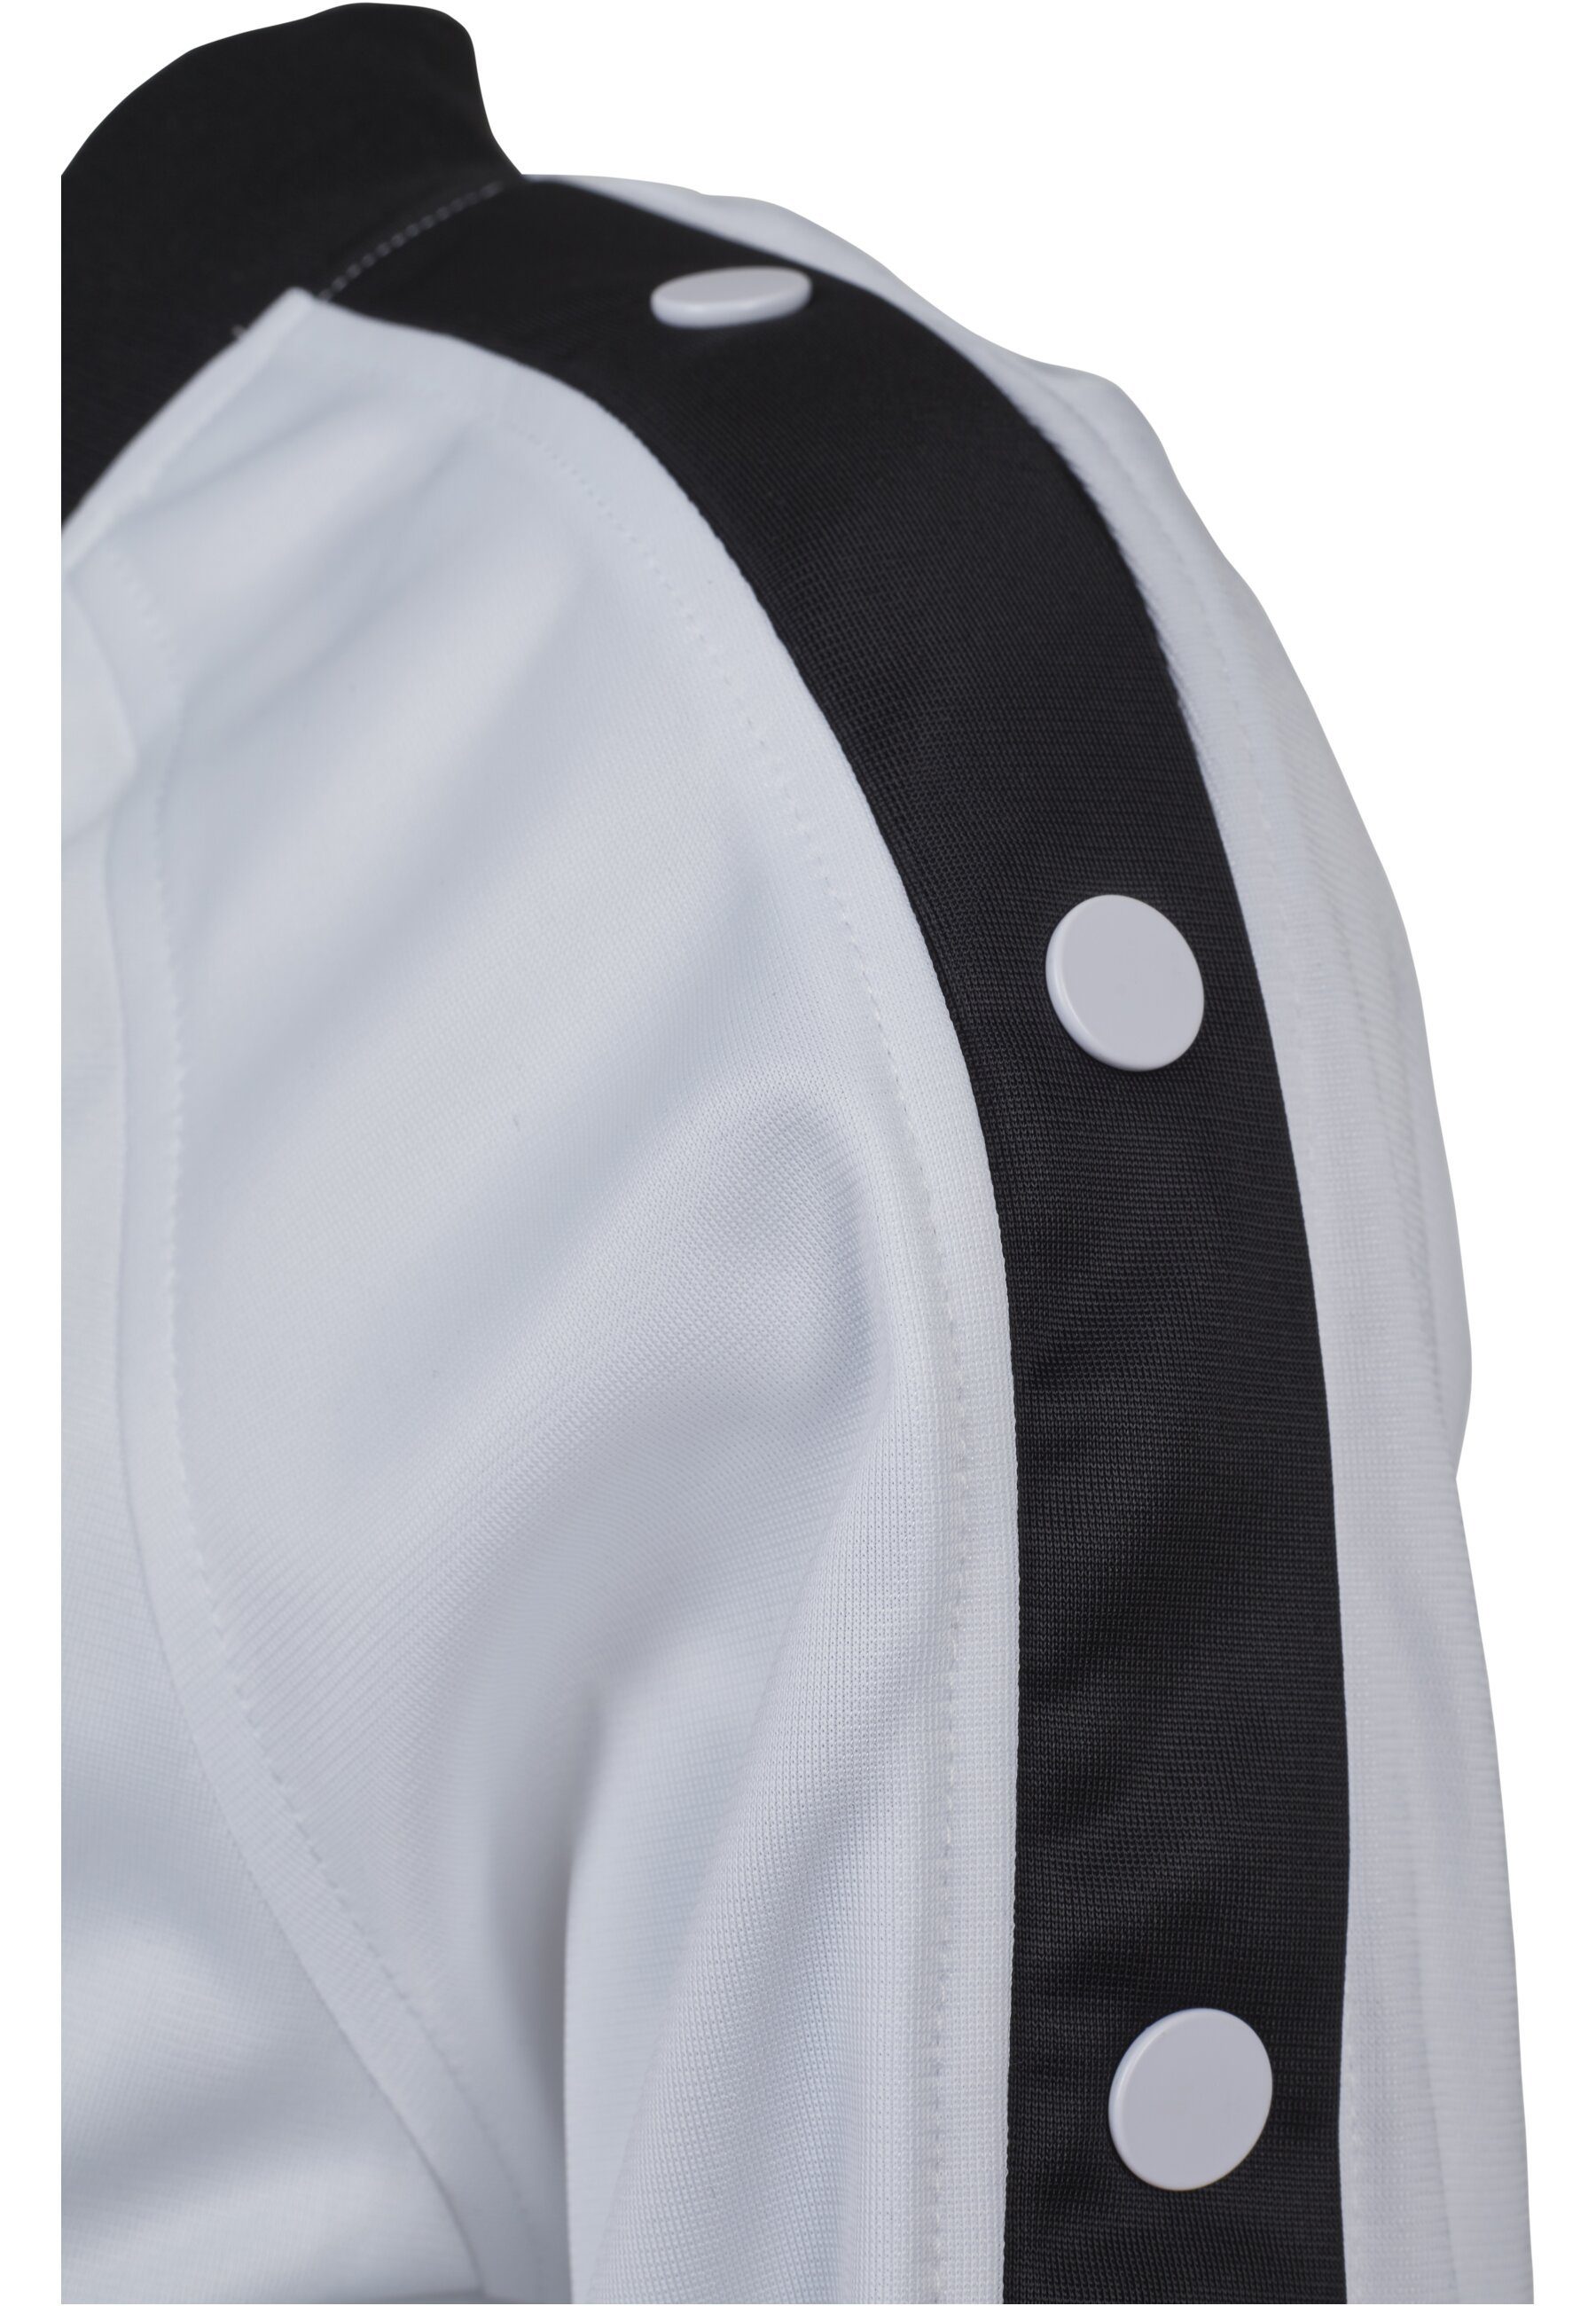 Up Ladies CLASSICS Damen Button URBAN (1-St) white/black/white Jacket Strickfleecejacke Track